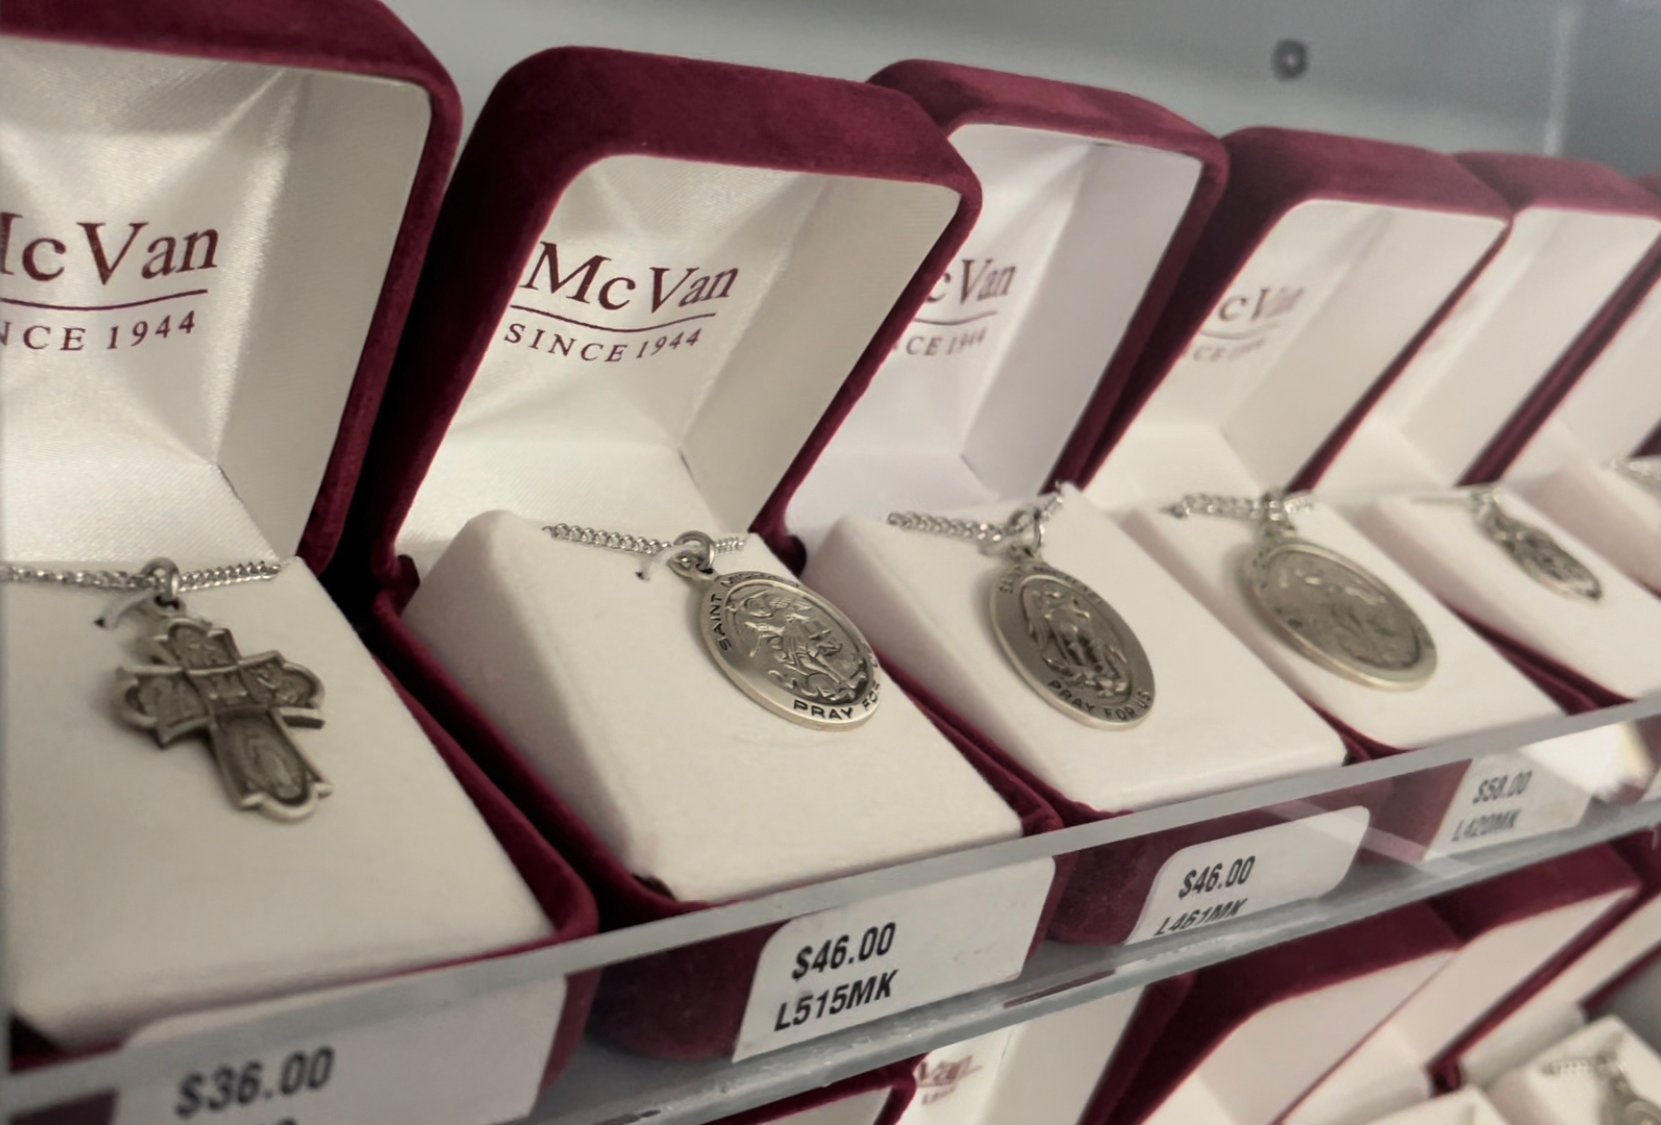 mcvan-jewelry-price-tags